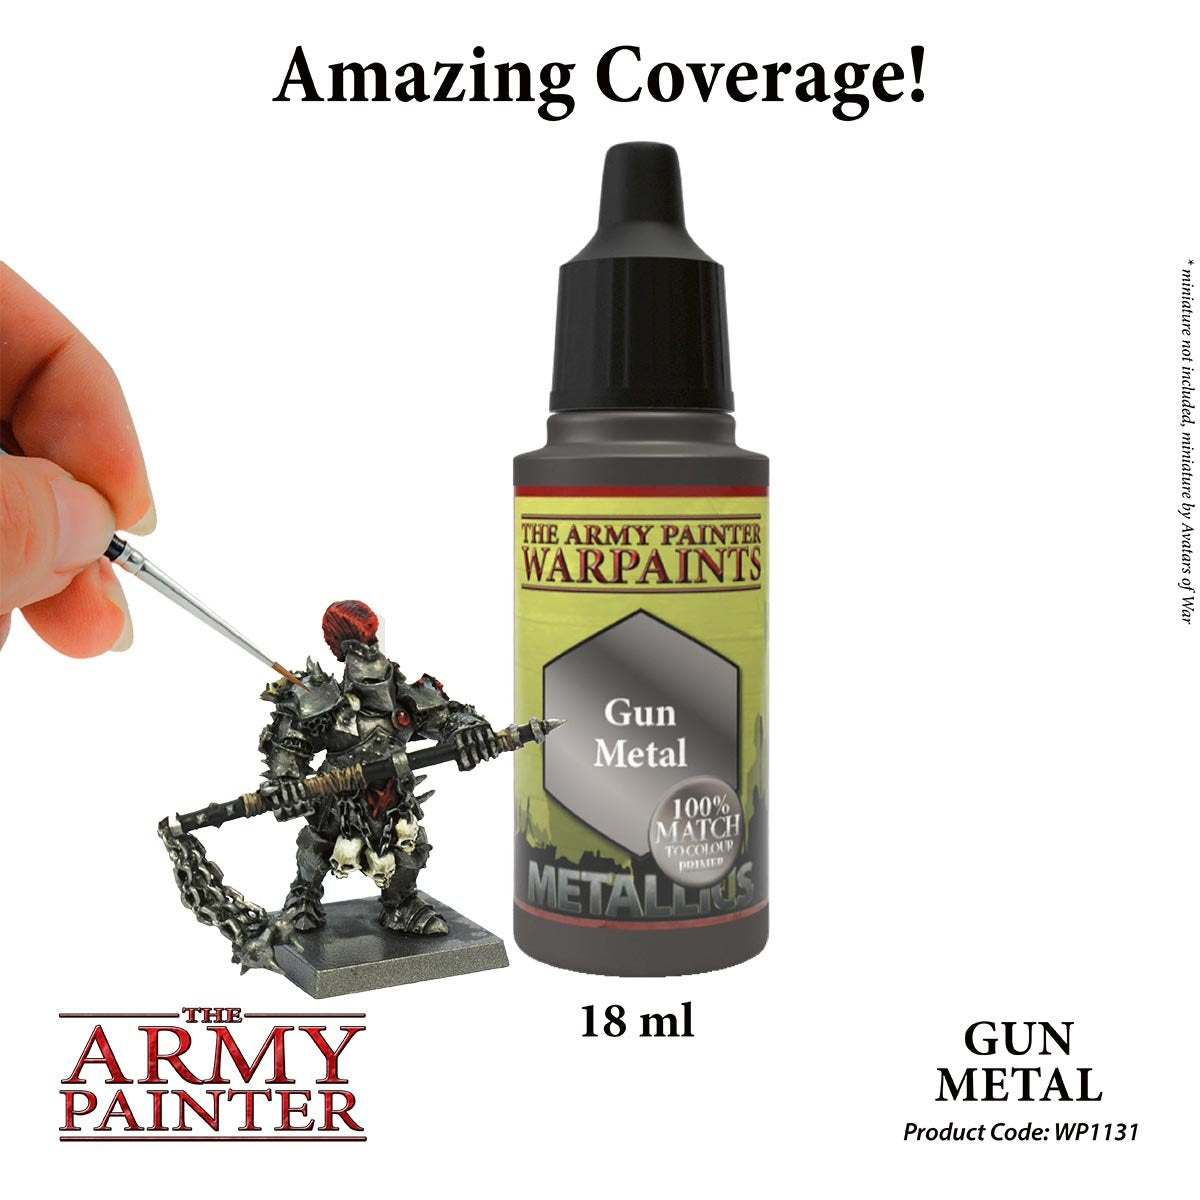 The Army Painter Warpaints WP1131 Gun Metal (Metallic) Acrylic Paint 18ml bottle